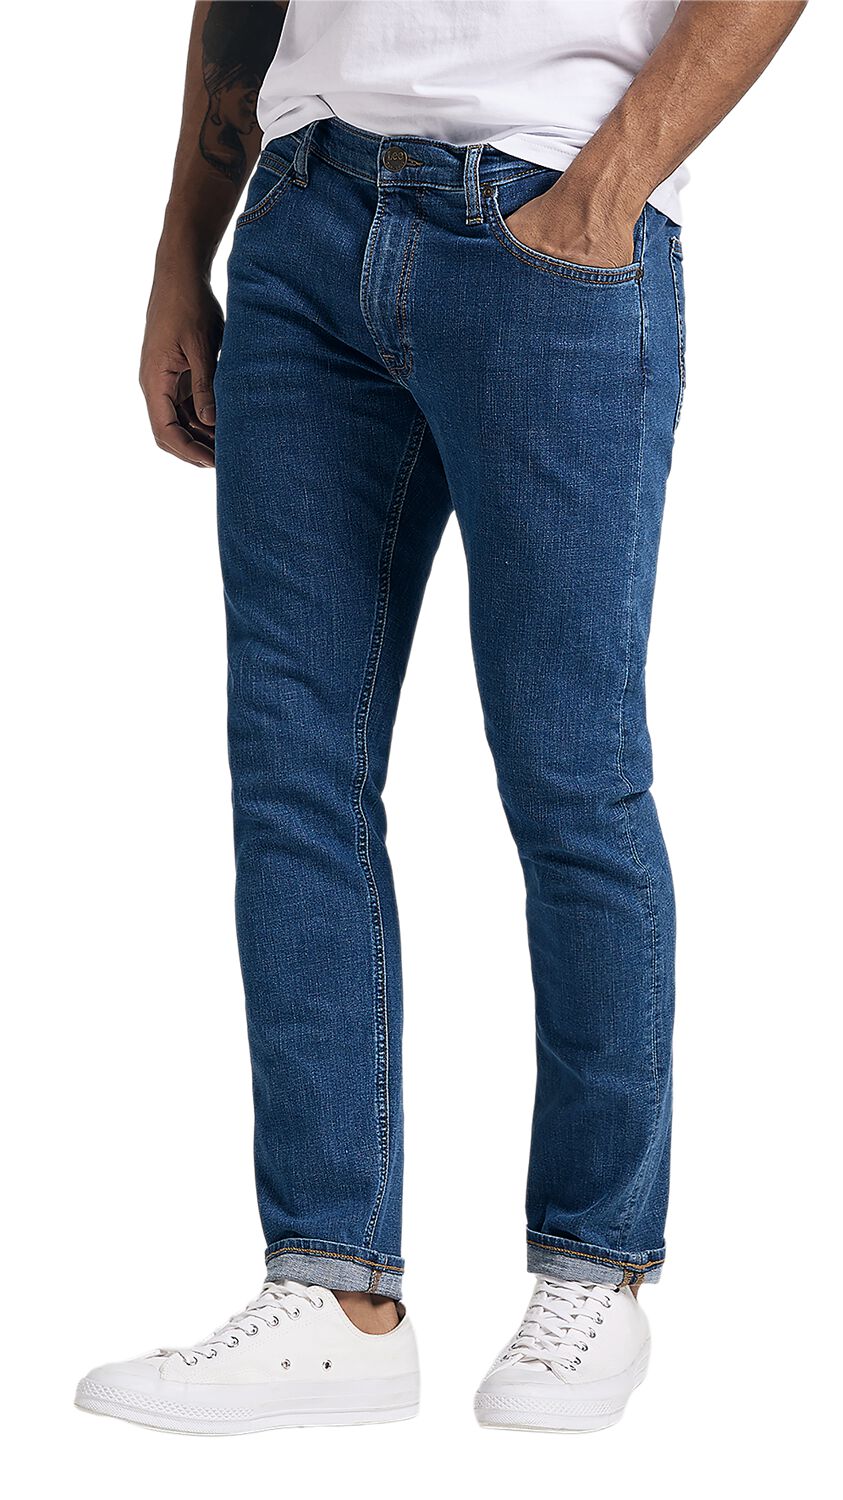 Image of Lee Jeans Luke Slim Tapered Fit Mid Stone Wash Jeans blau